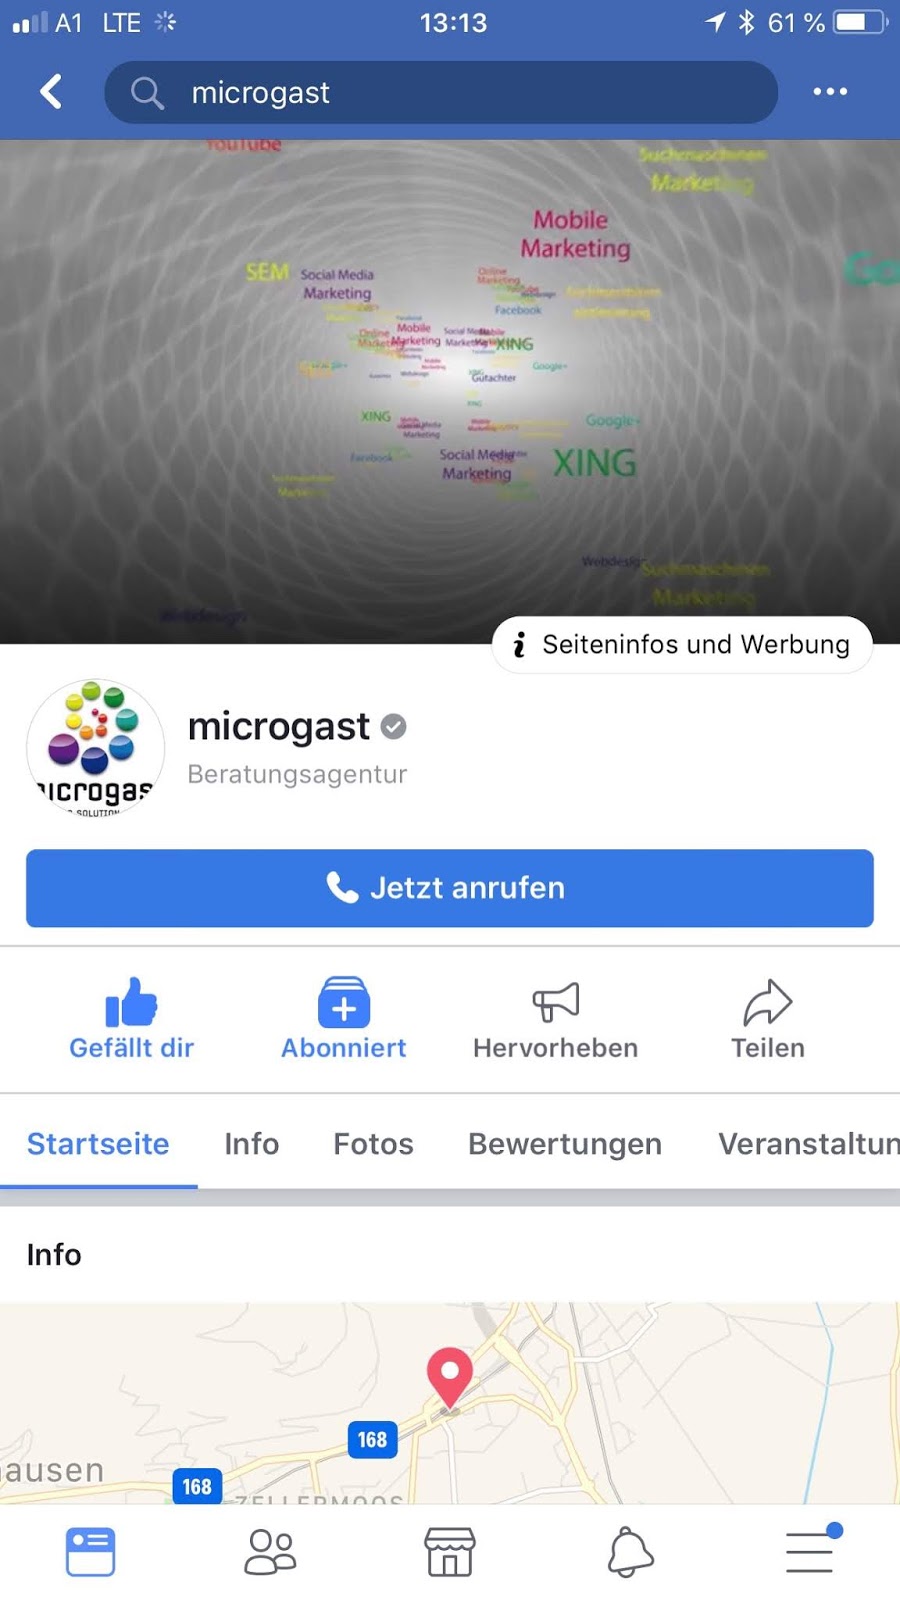 Stephan Microgast Facebook Messaging Button Fehlt In Facebook App